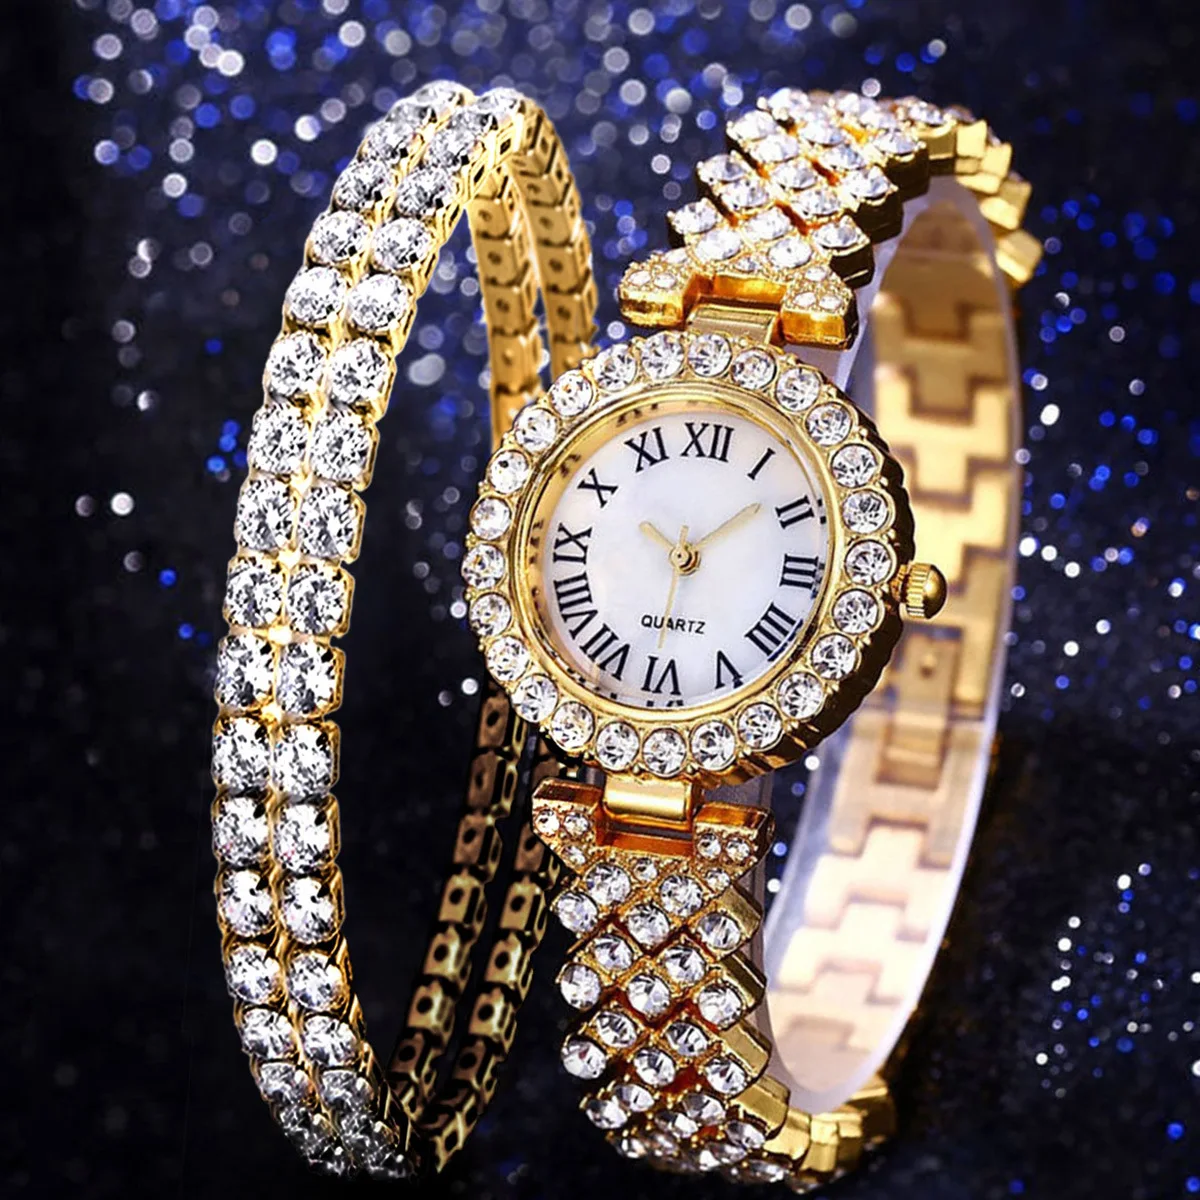 

Fashion Crystal Women Watches Dress Quartz Watch Women Rhinestone Casual Wristwatch Reloje Mujer Relogio Feminino ladies watch